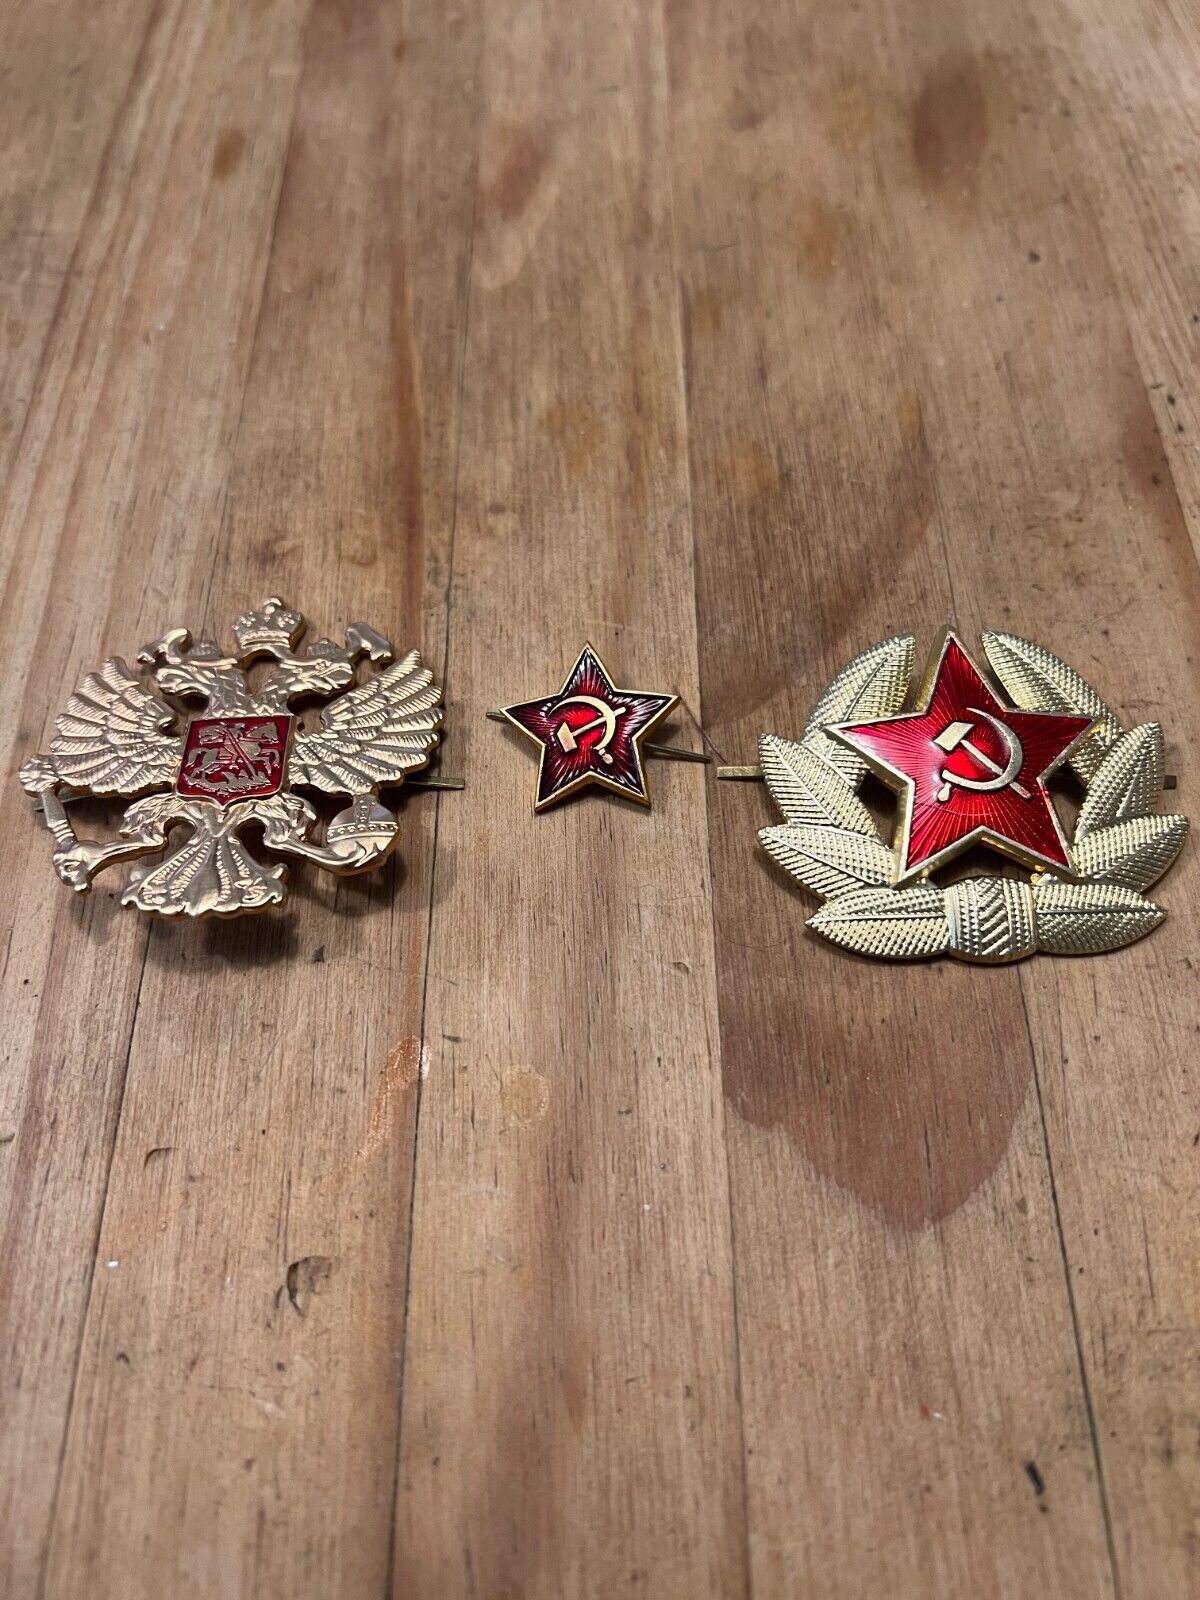 Russian Pilotka Ushanka Hat Pins Soviet USSR Pin Cockade, ALL in one listing